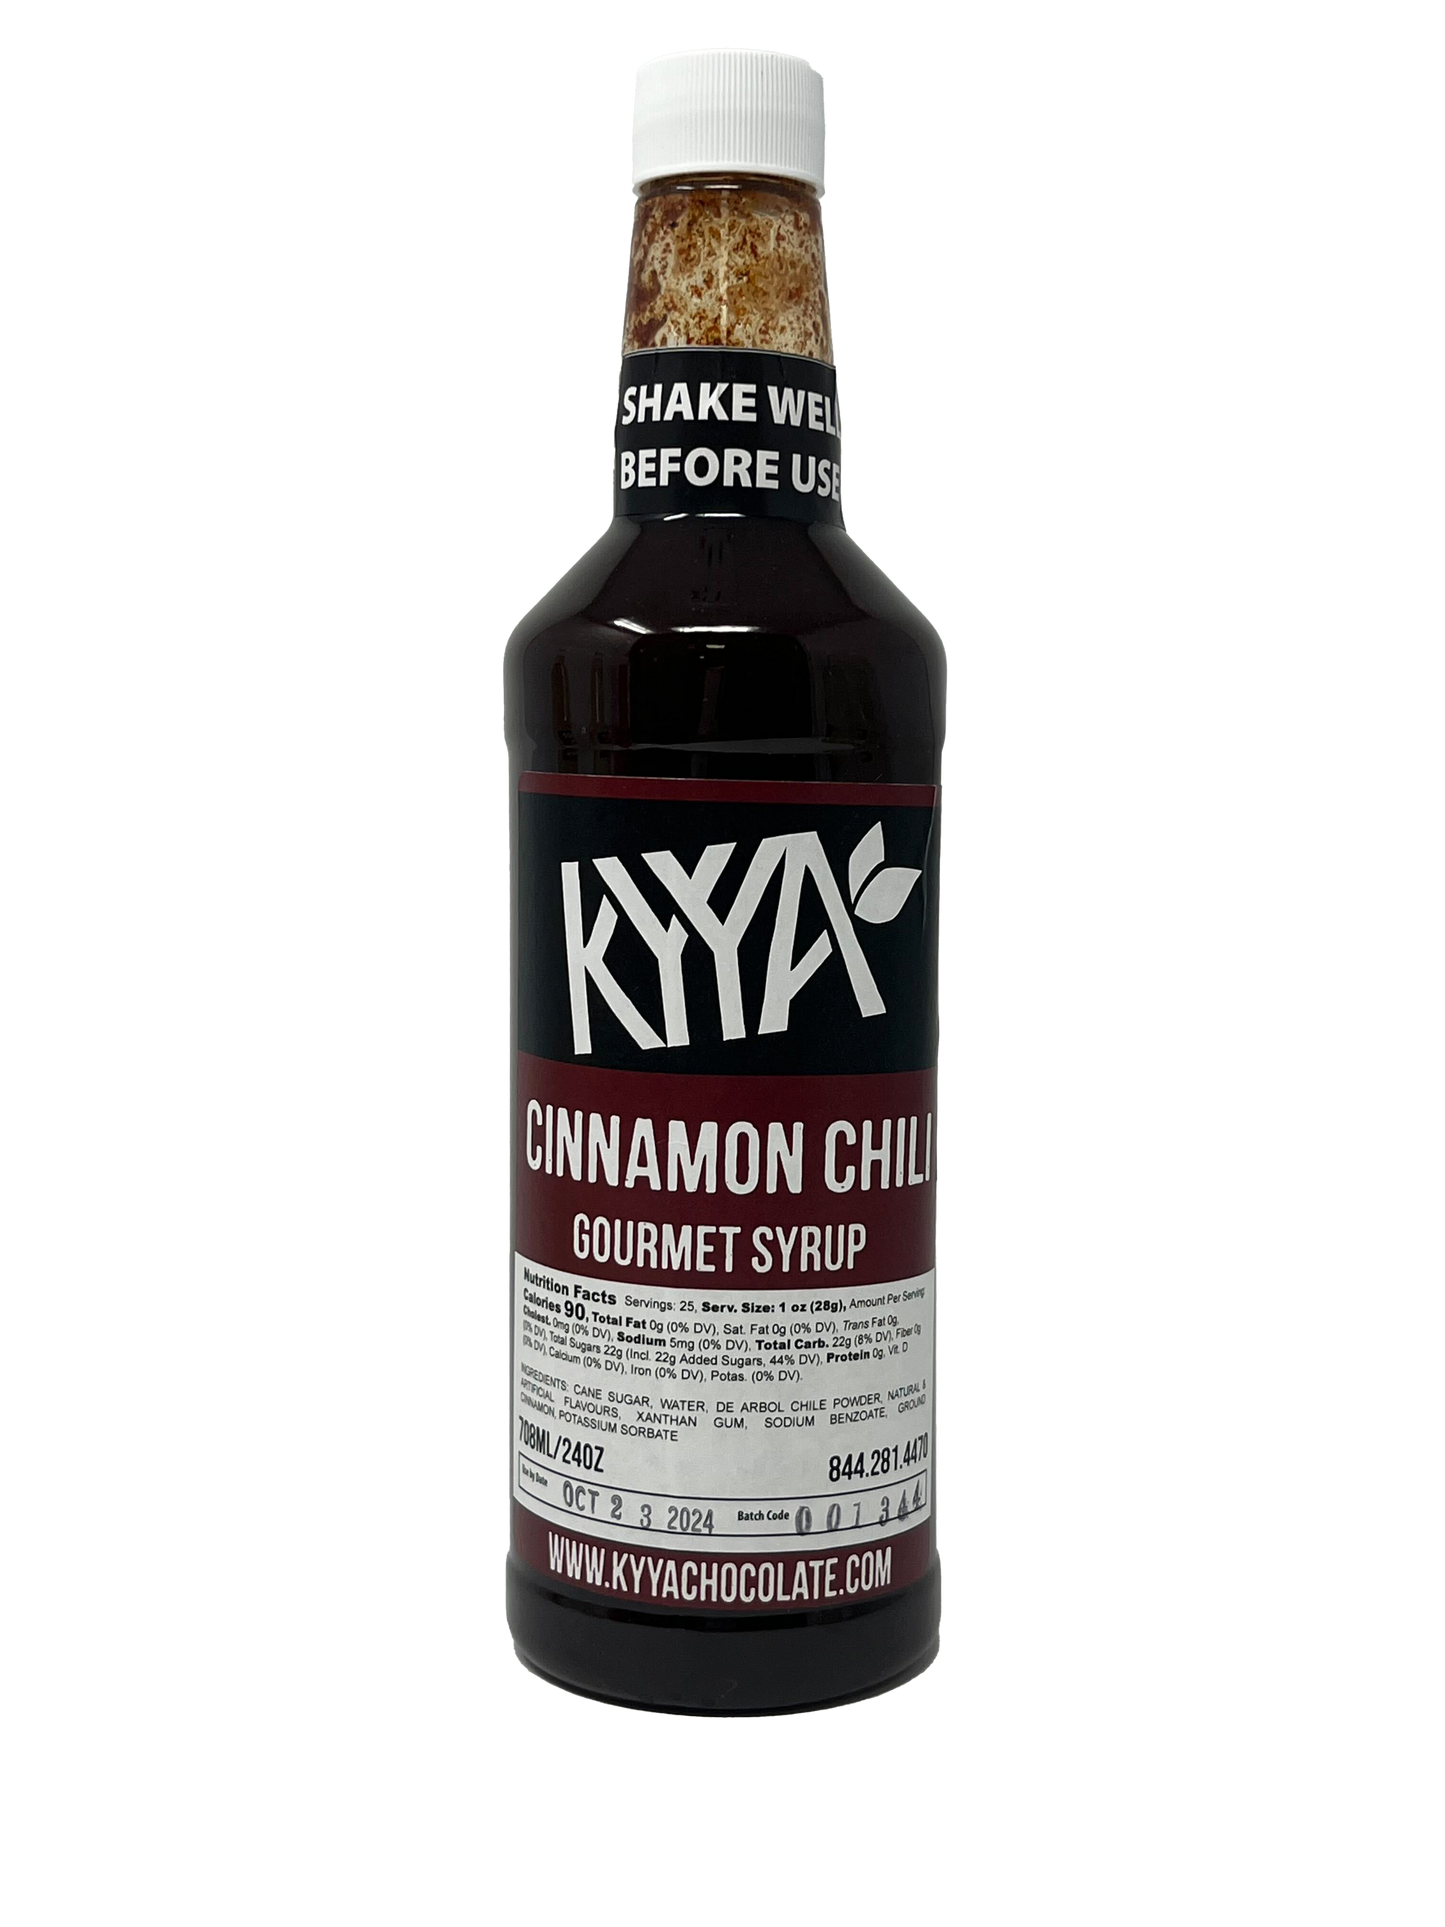 Cinnamon Chili Gourmet Syrup